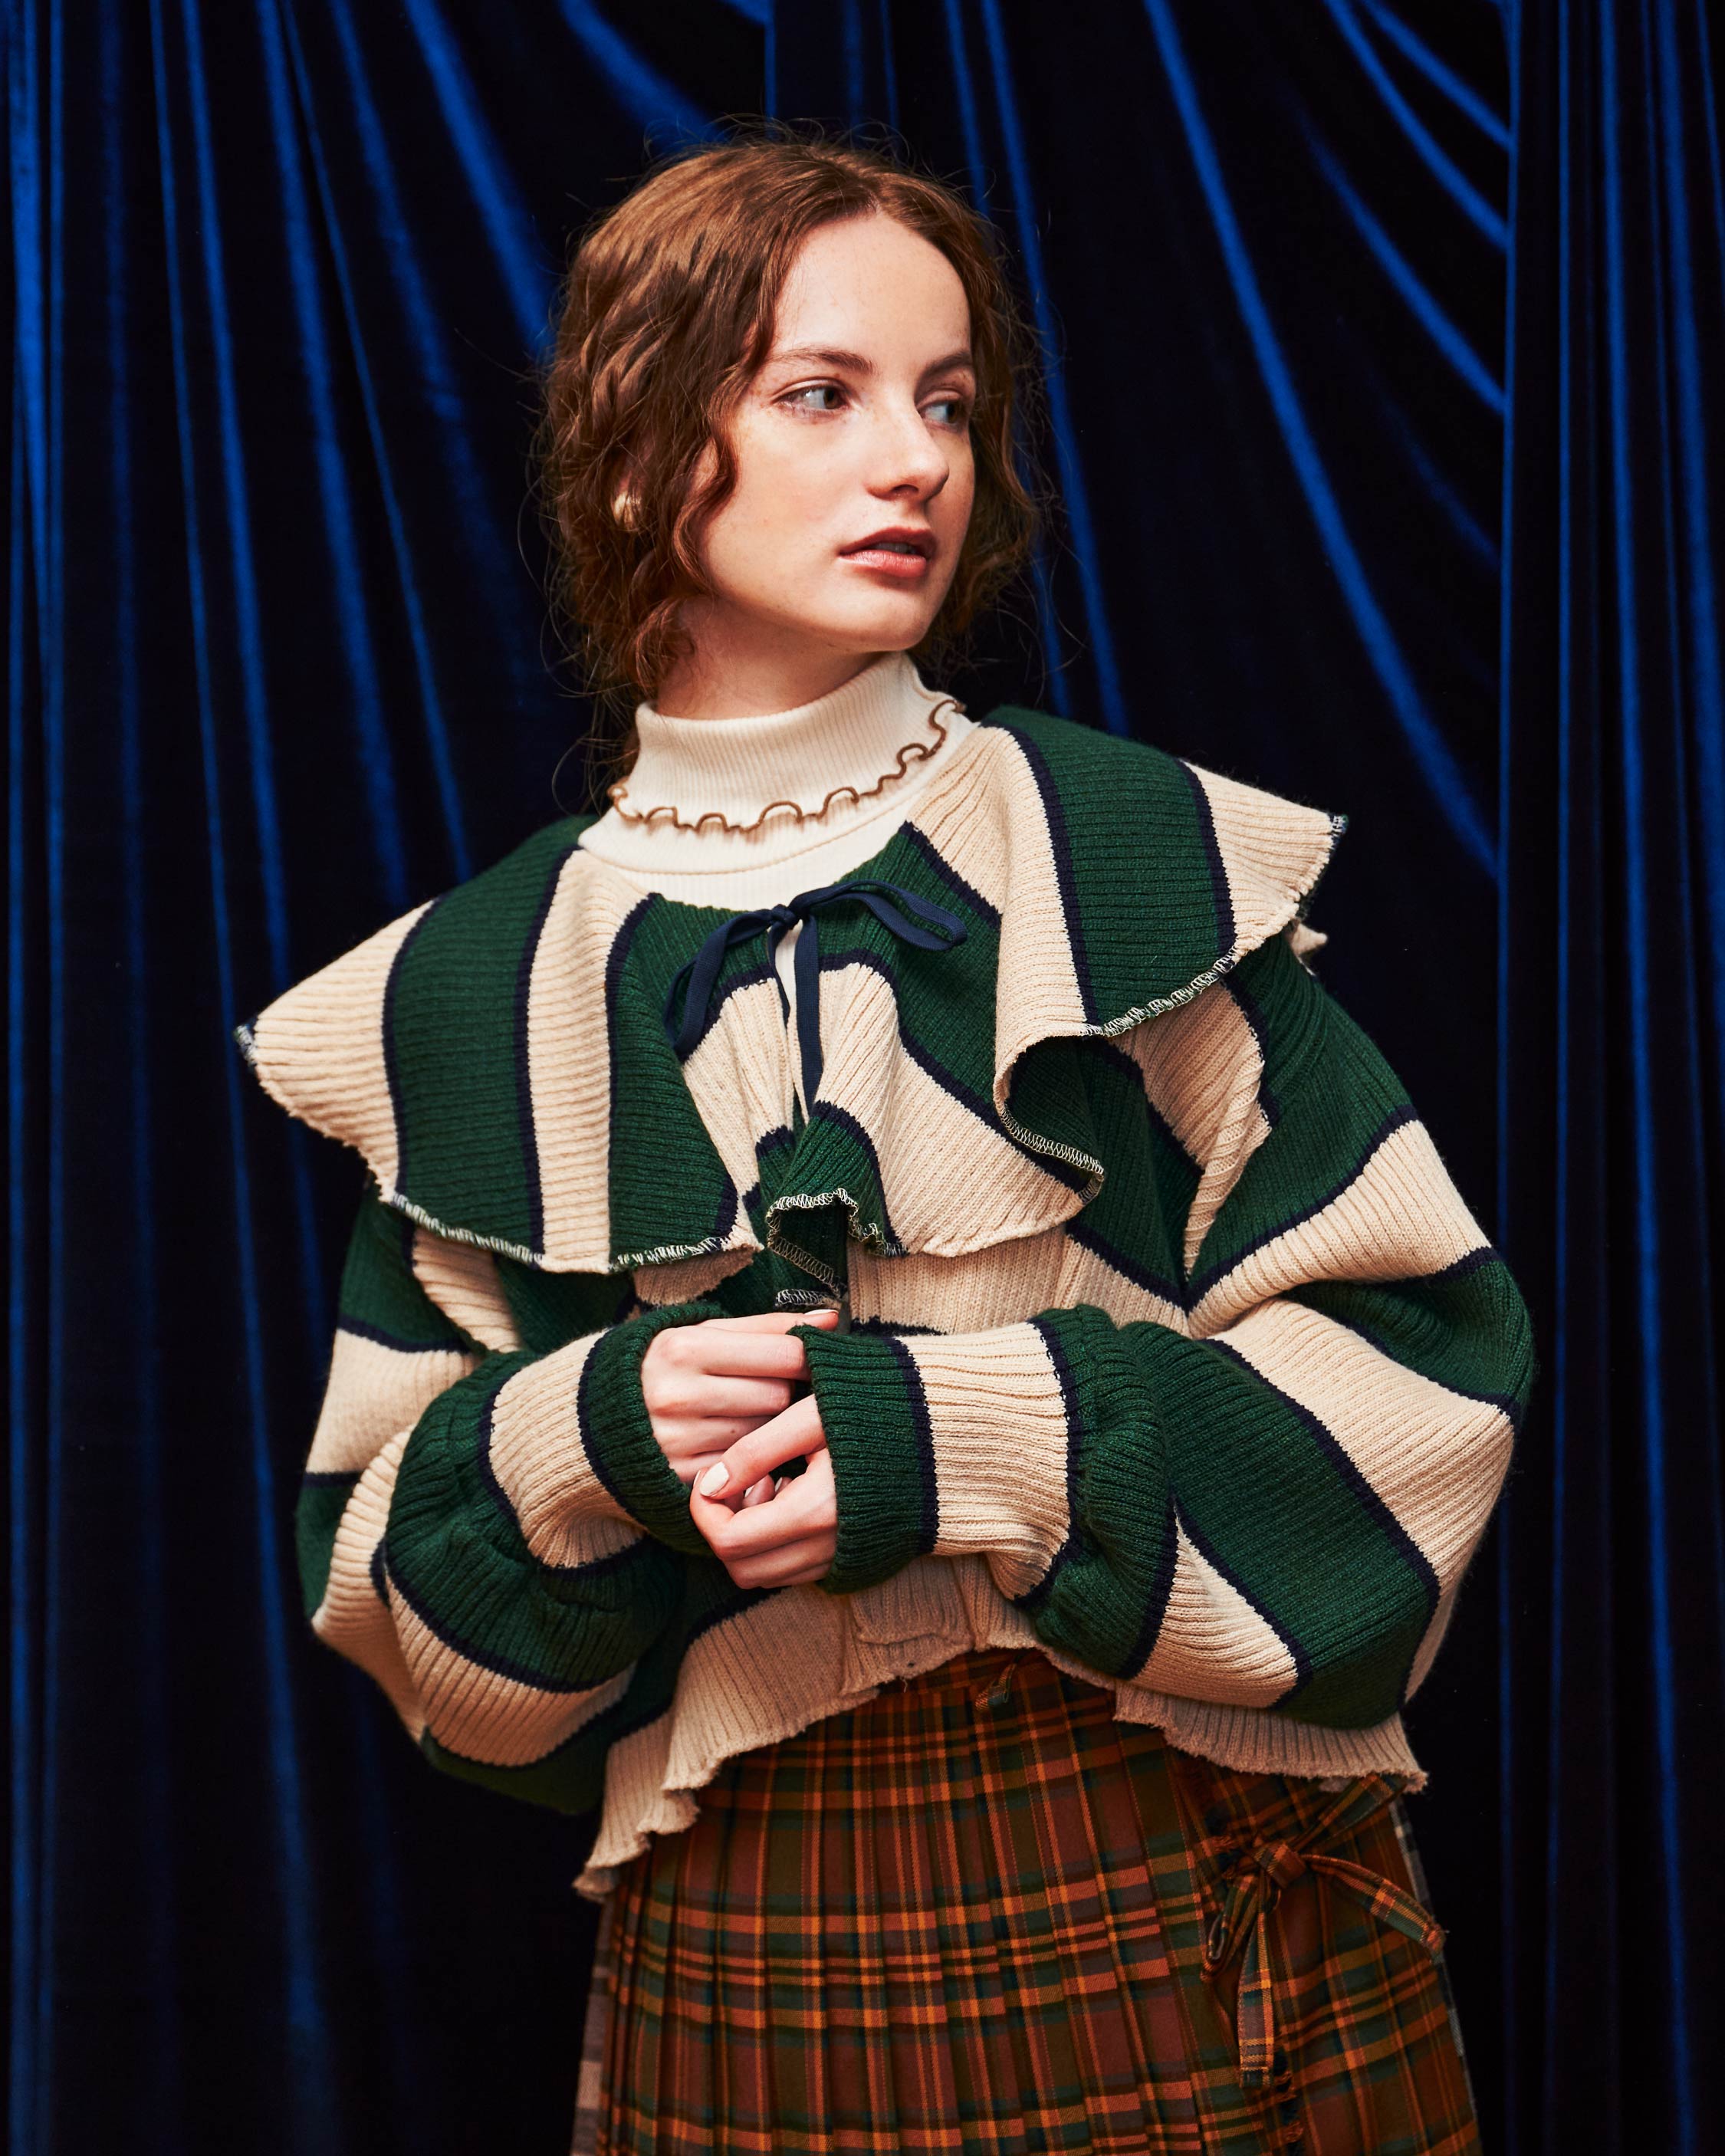 Border knit cardigan (Green) – POPPY